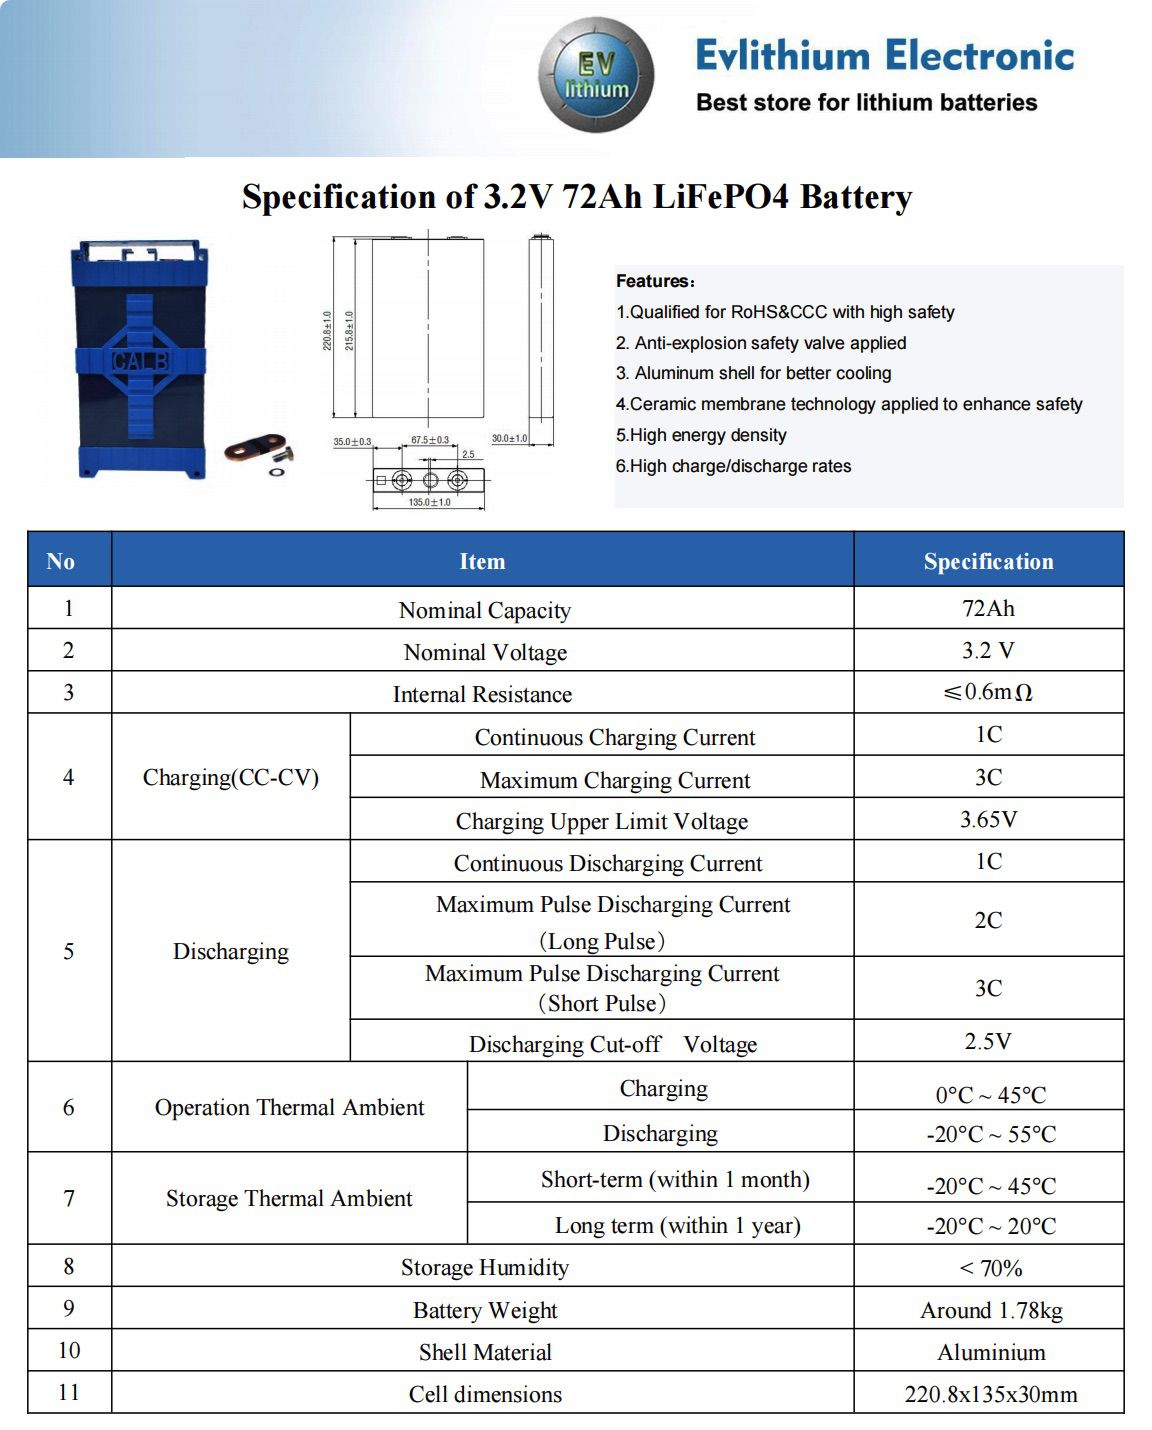 Specification of 3.2V 72Ah battery